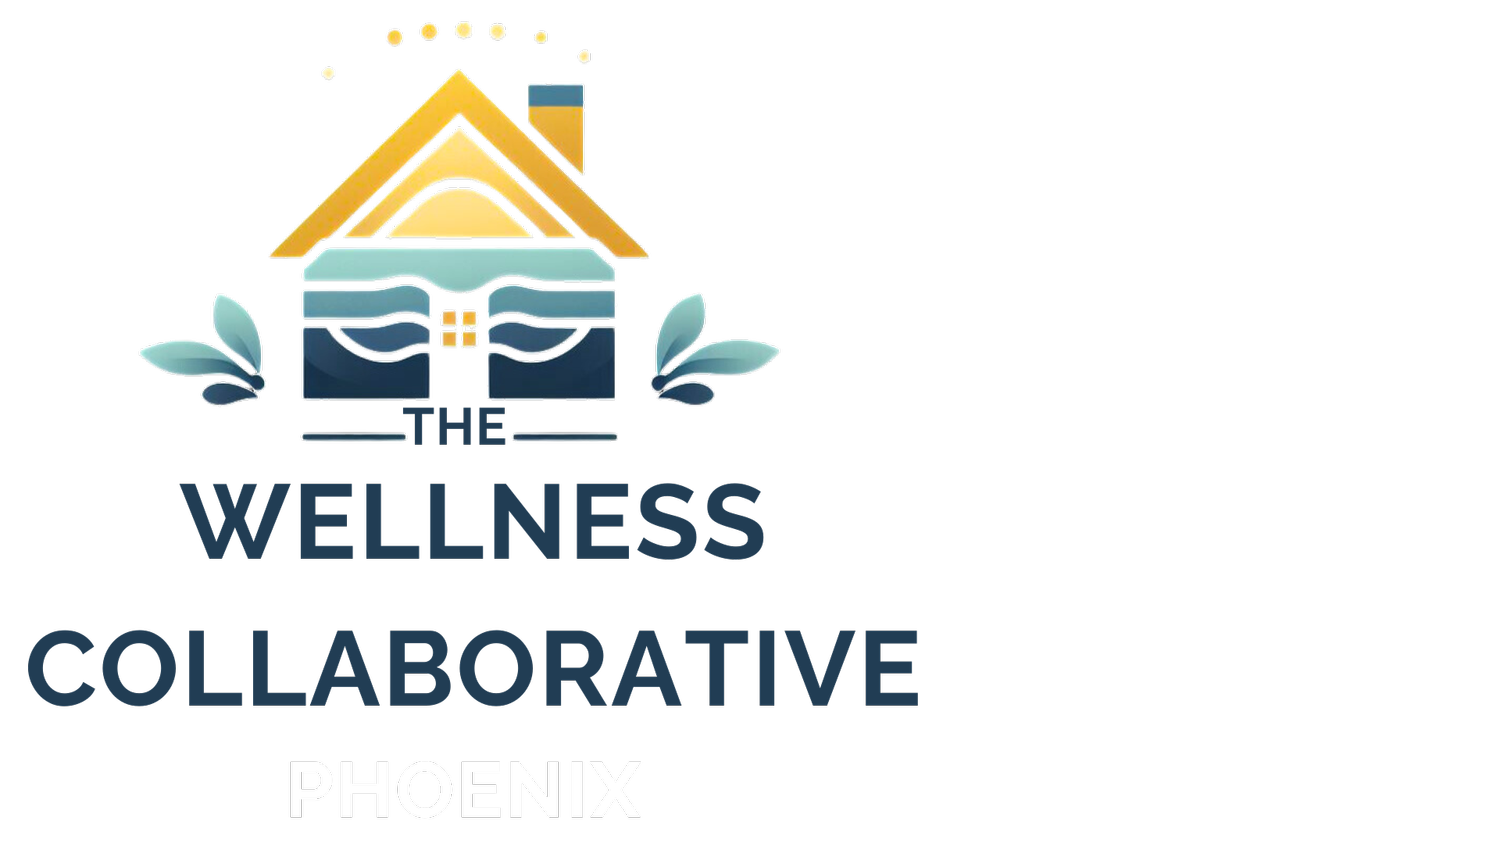 The Wellness Collaborative - PHOENIX